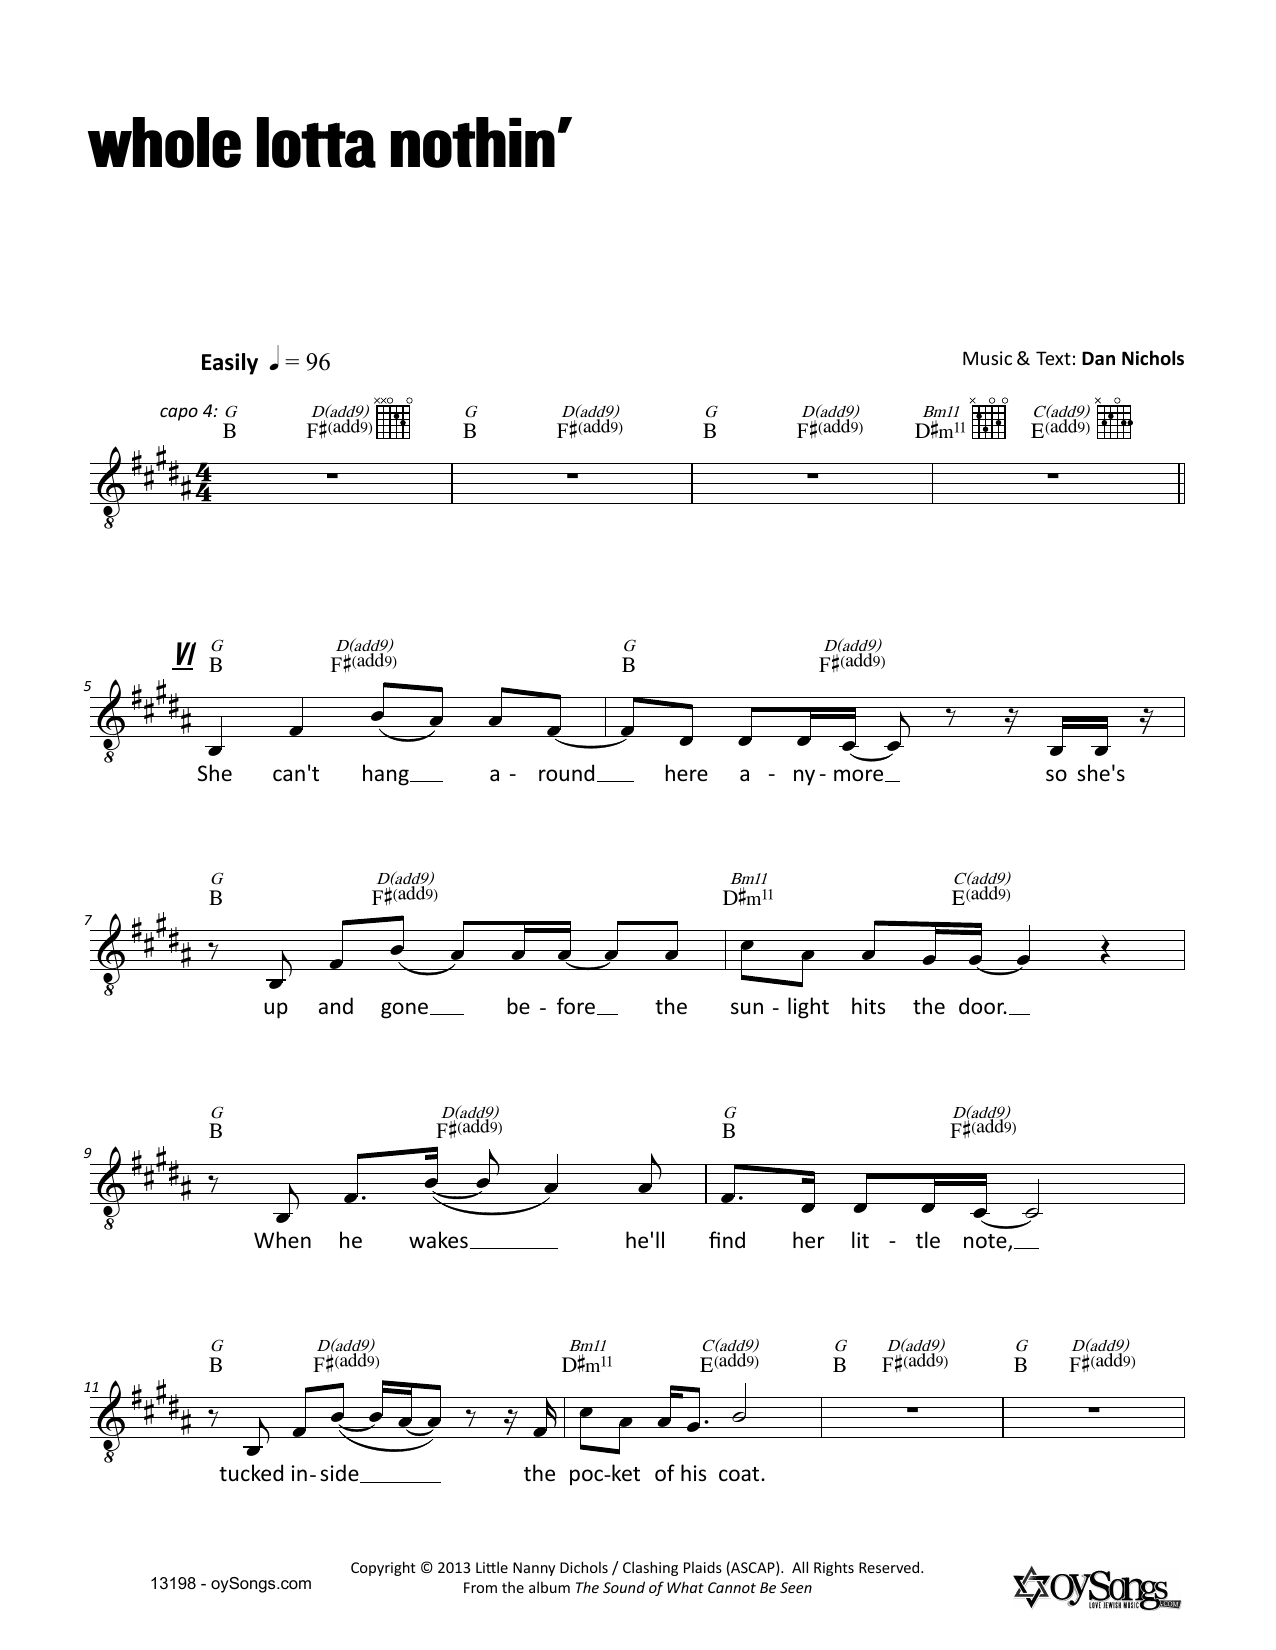 Dan Nichols Whole Lotta Nothin' Sheet Music Notes & Chords for Melody Line, Lyrics & Chords - Download or Print PDF